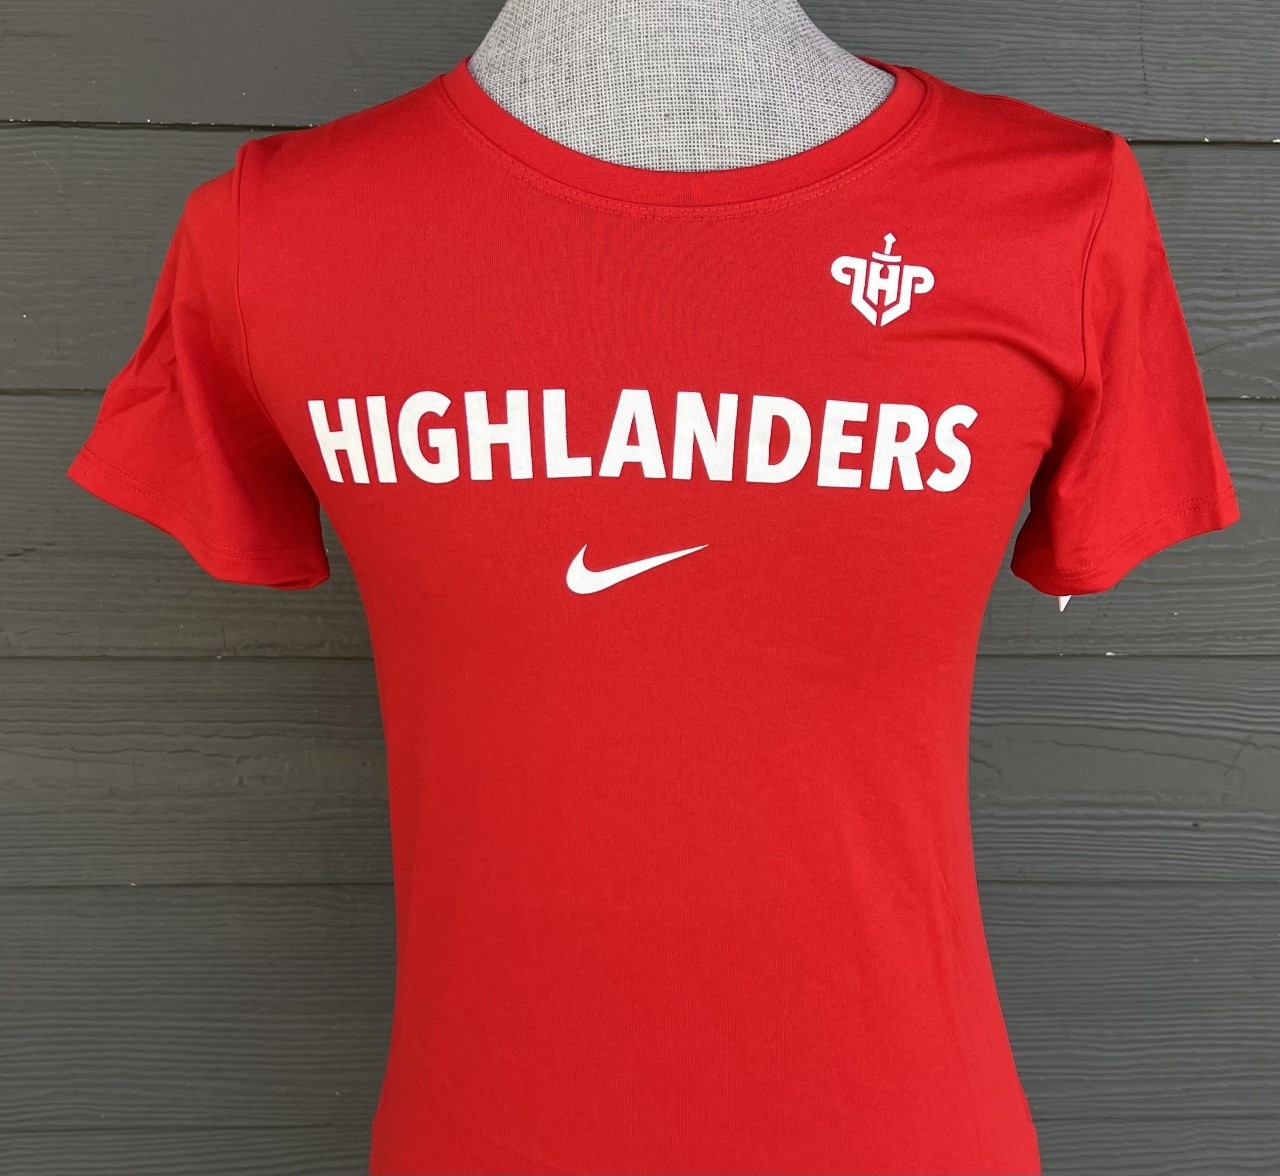 Nike Adult New Logo above Highlanders